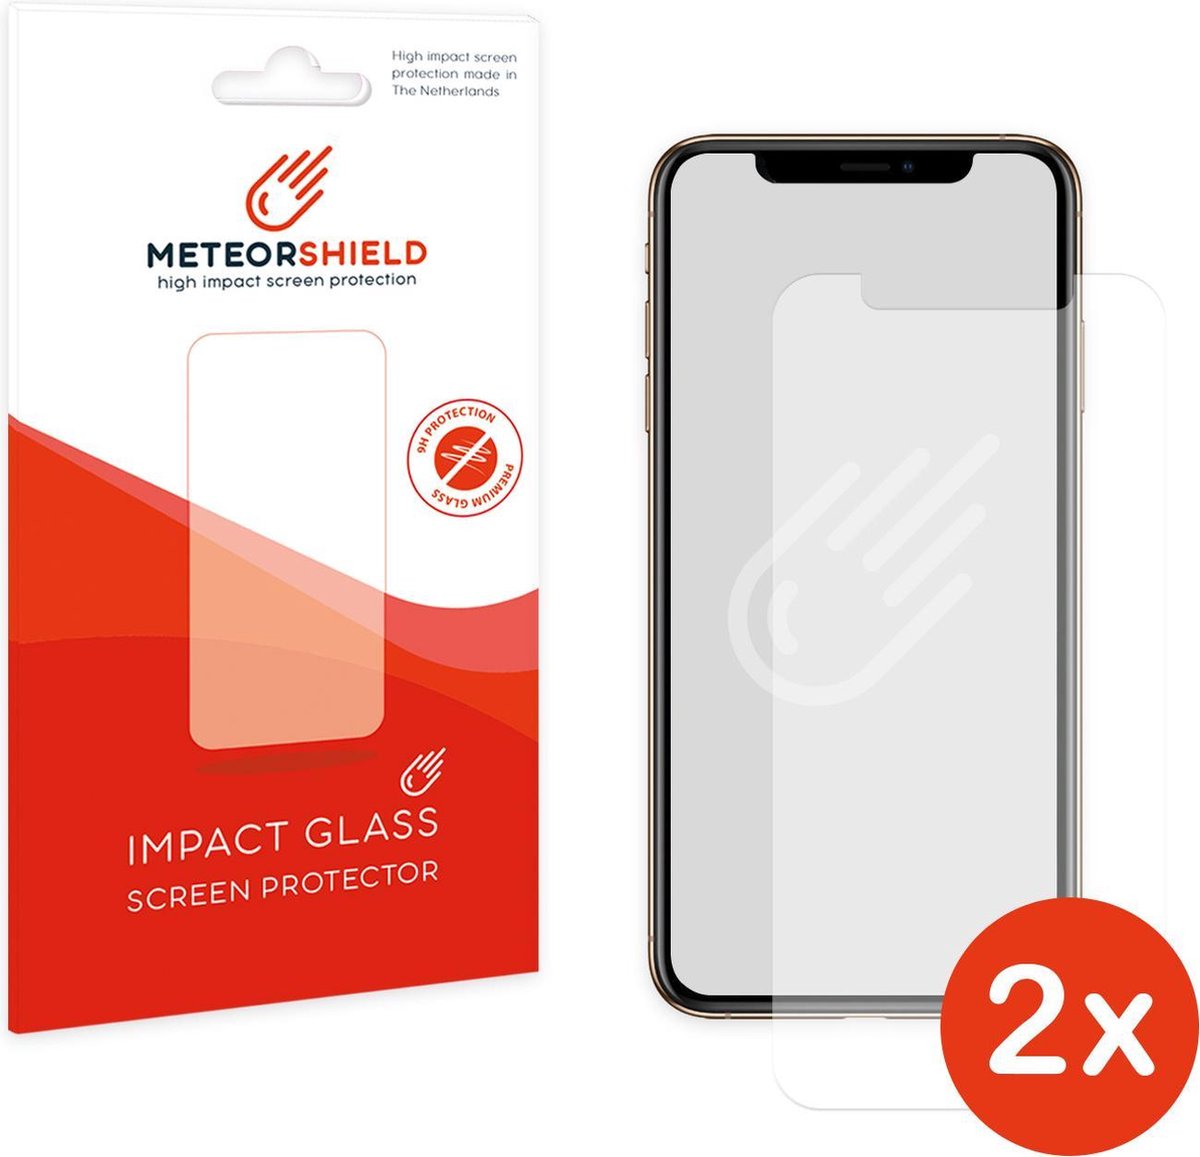 2 stuks: Meteorshield iPhone 11 Pro Max screenprotector - Ultra clear impact glass